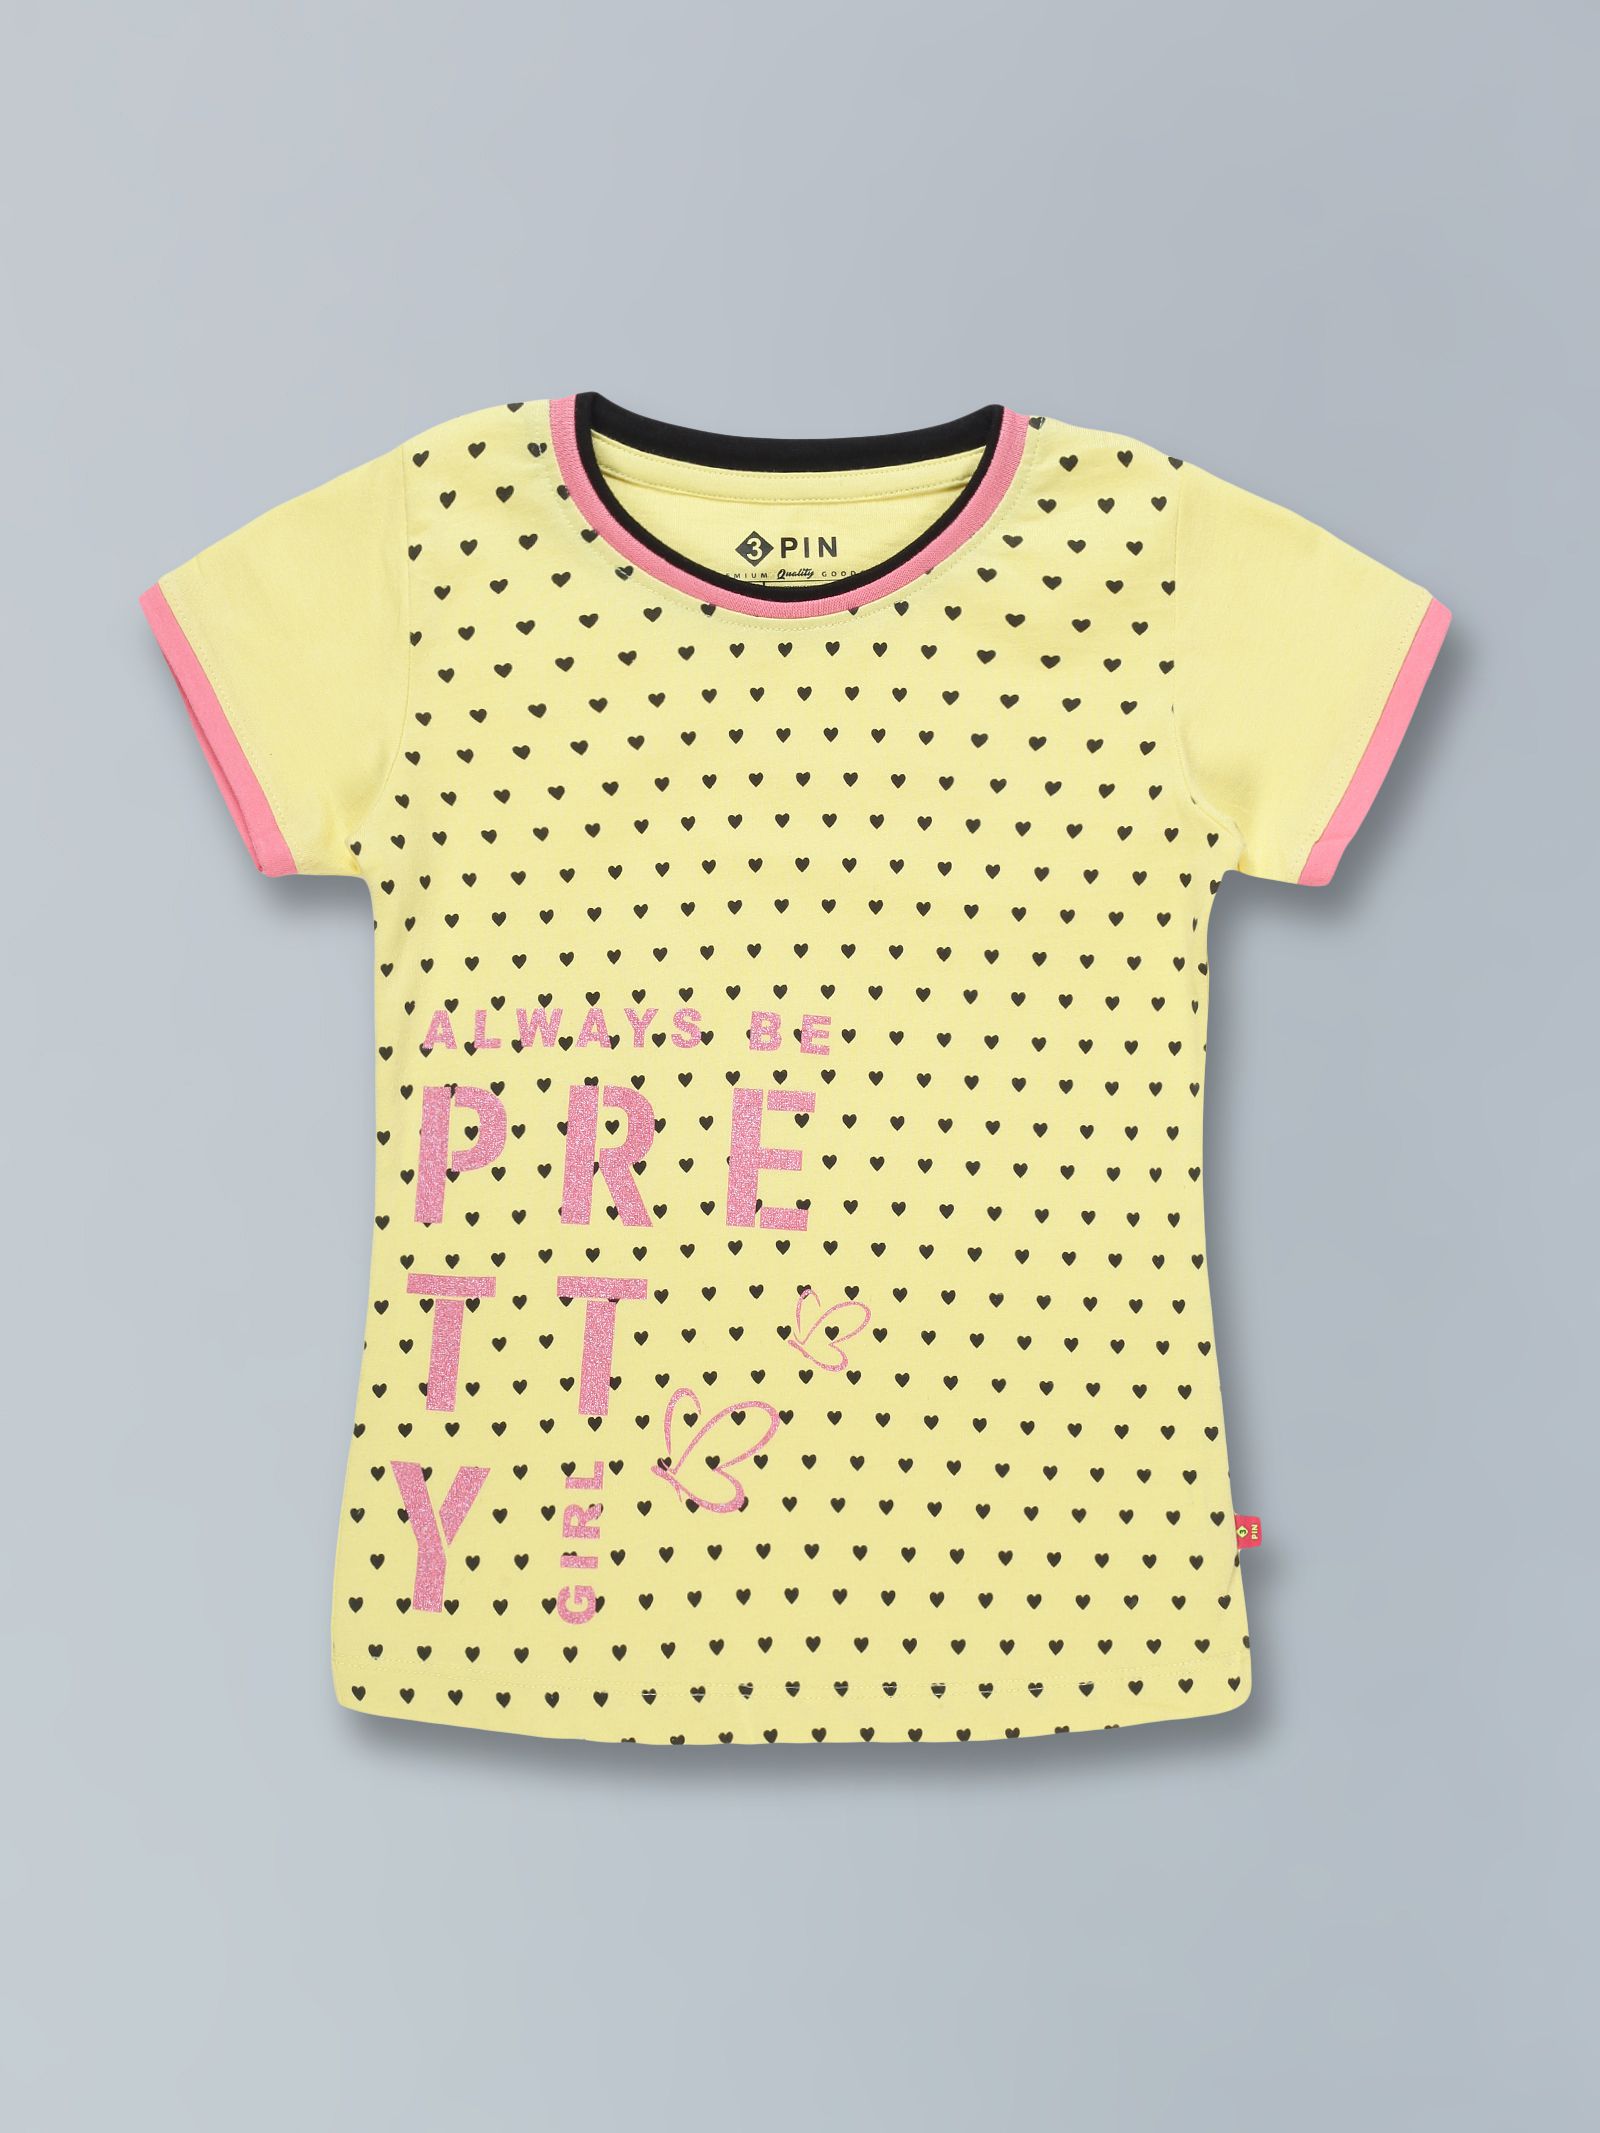     			3PIN Yellow 100% Cotton Girls T-Shirt ( Pack of 1 )